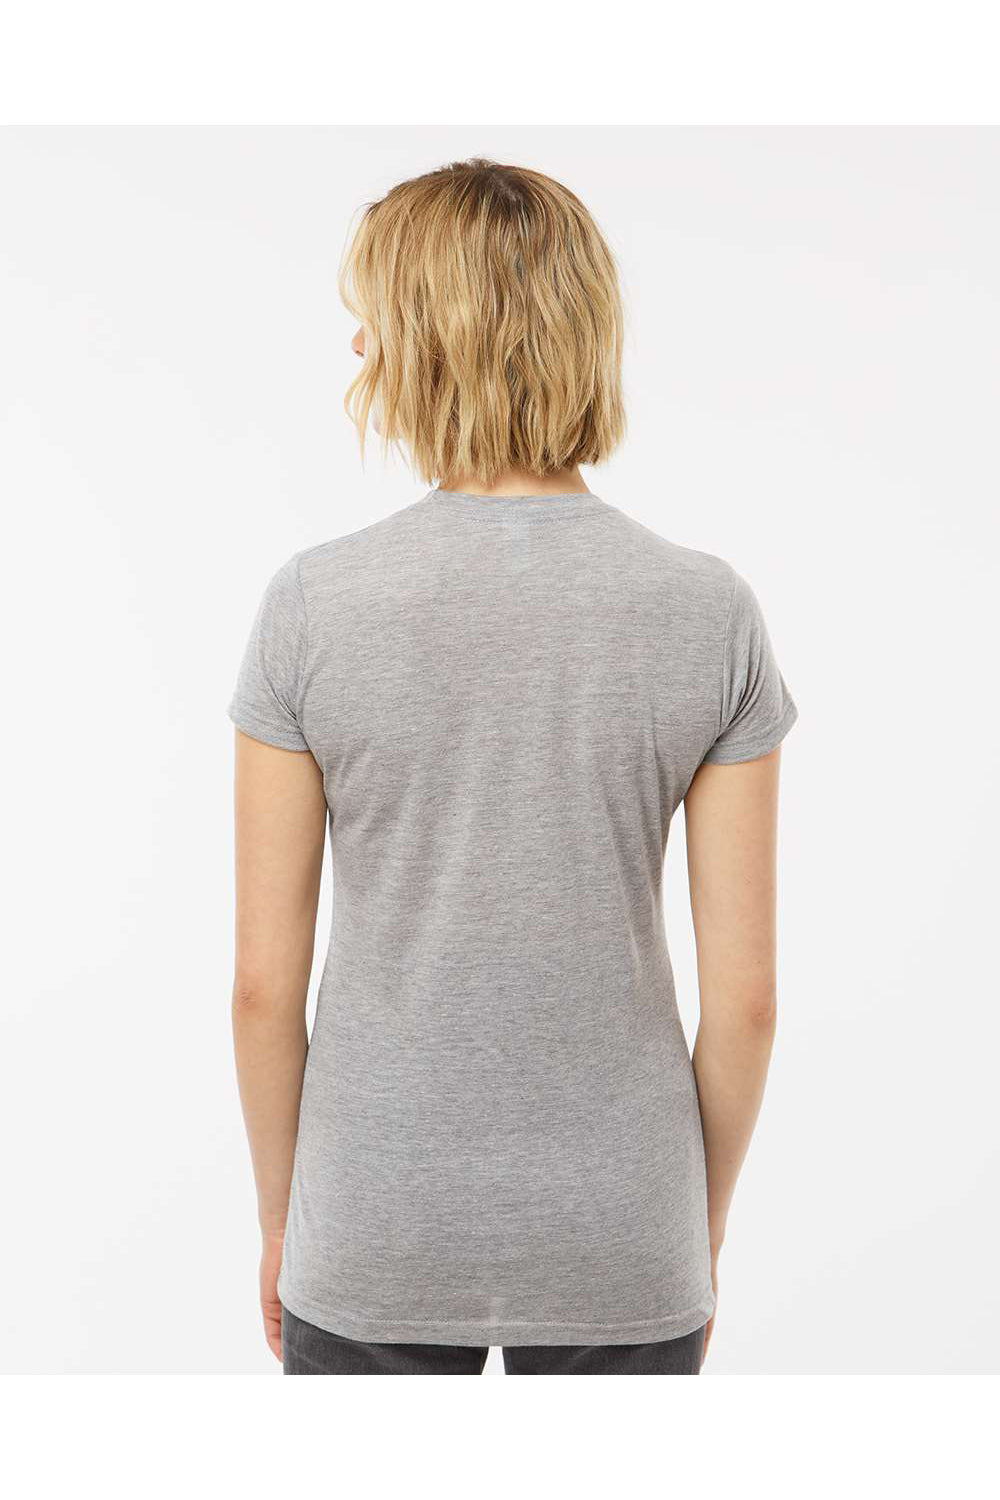 Tultex 240 Womens Poly-Rich Short Sleeve Crewneck T-Shirt Heather Grey Model Back